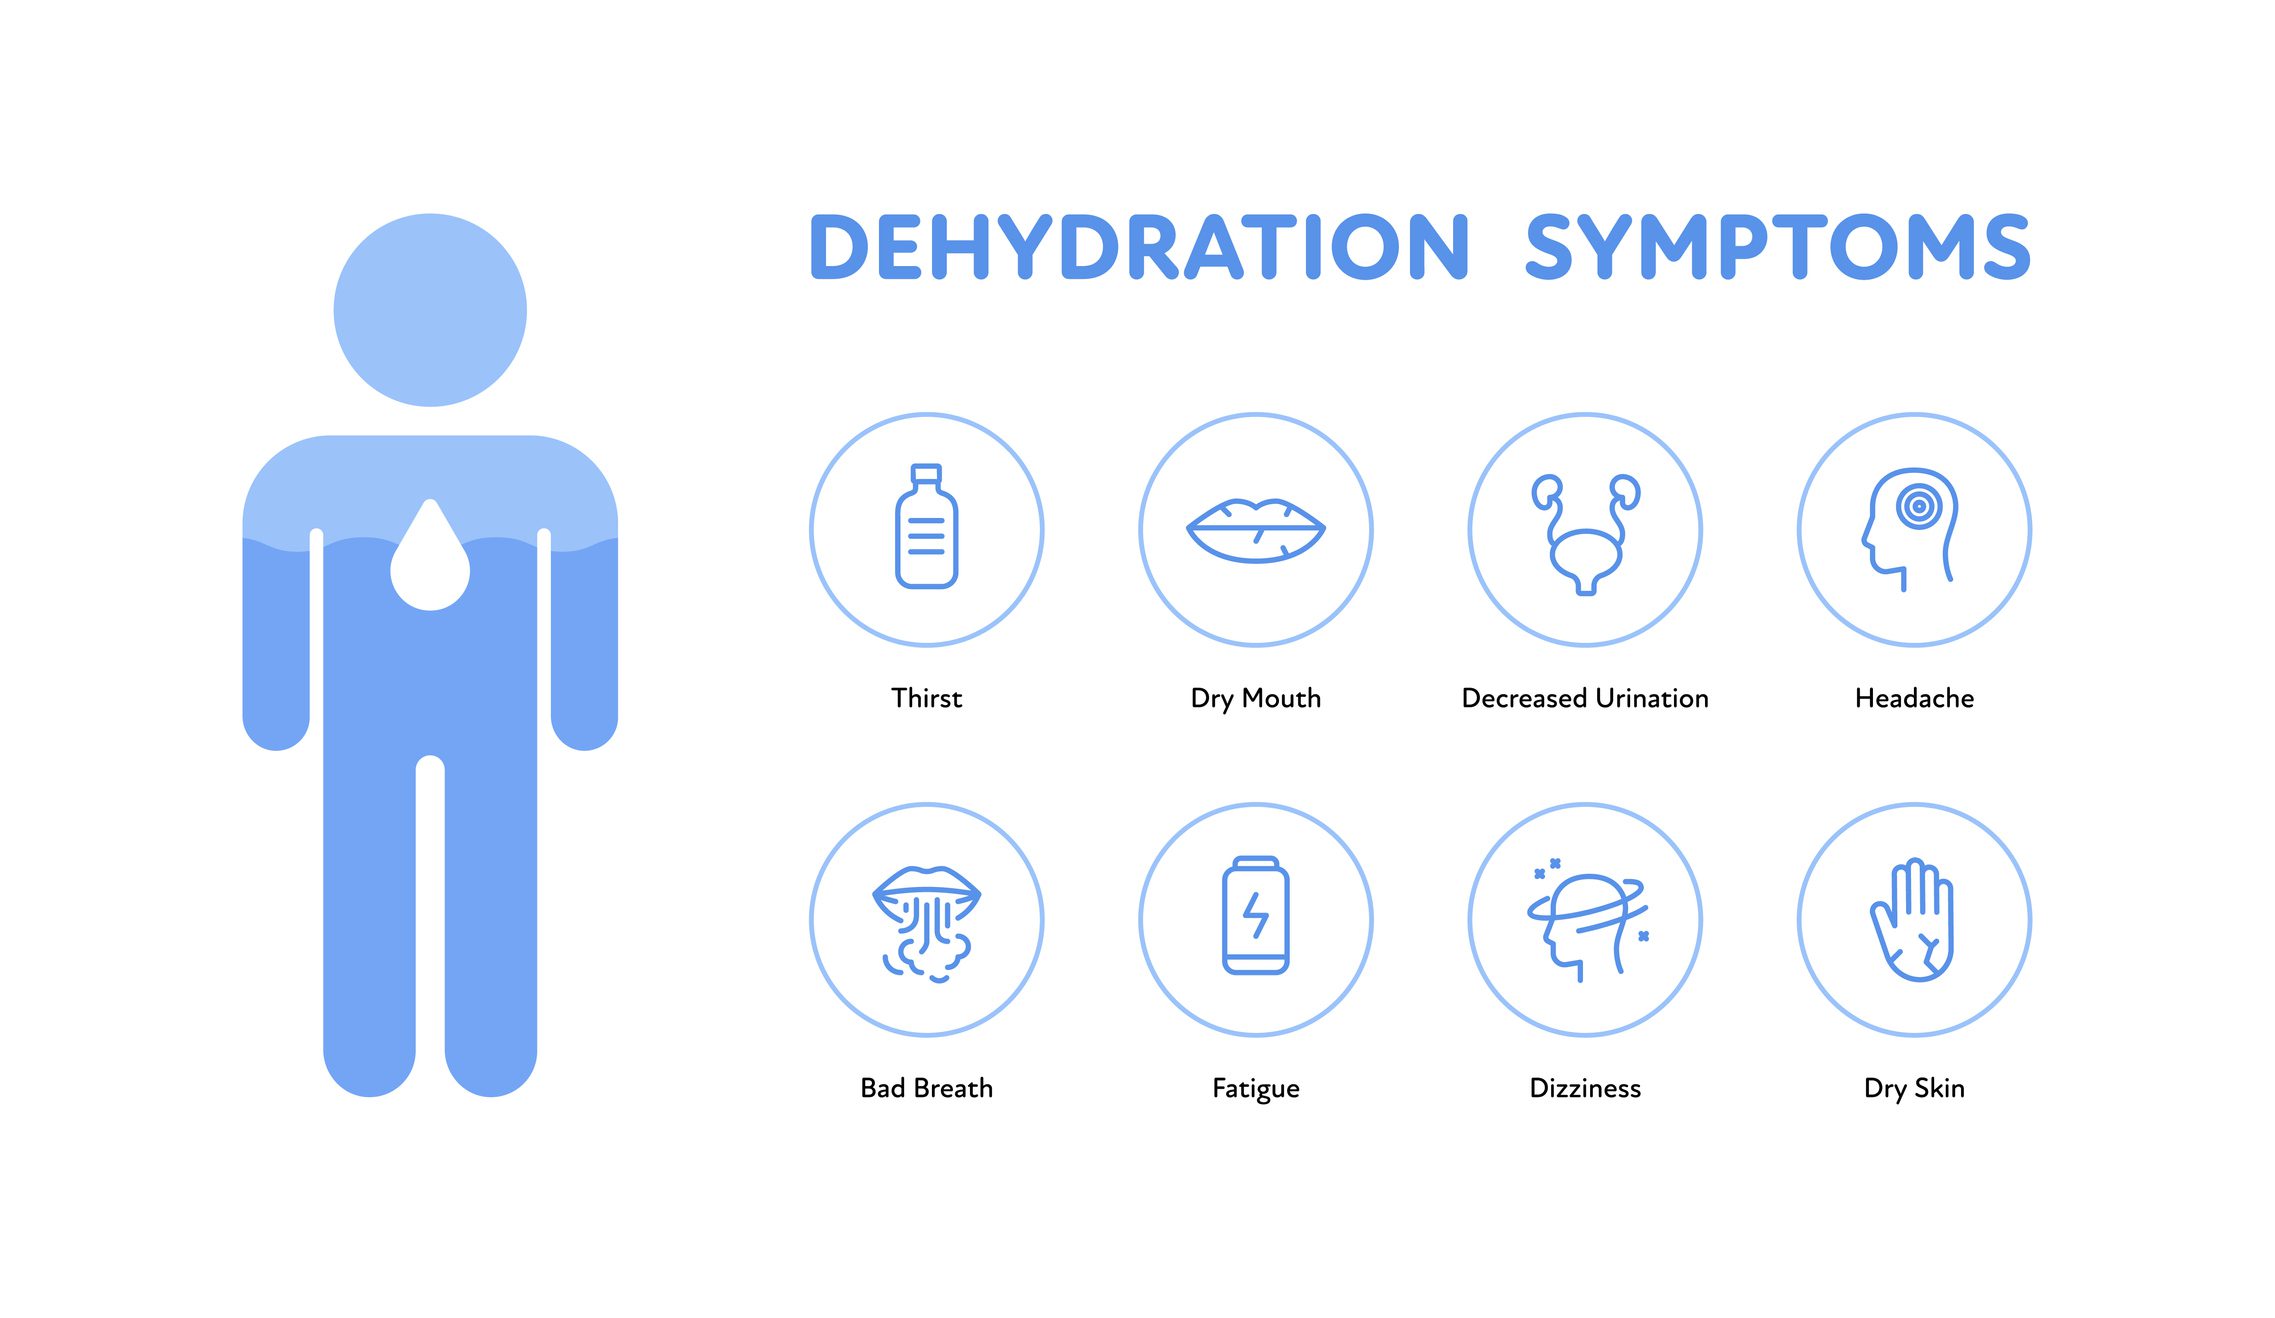 Dehydration symptoms that present when someone needs fluids